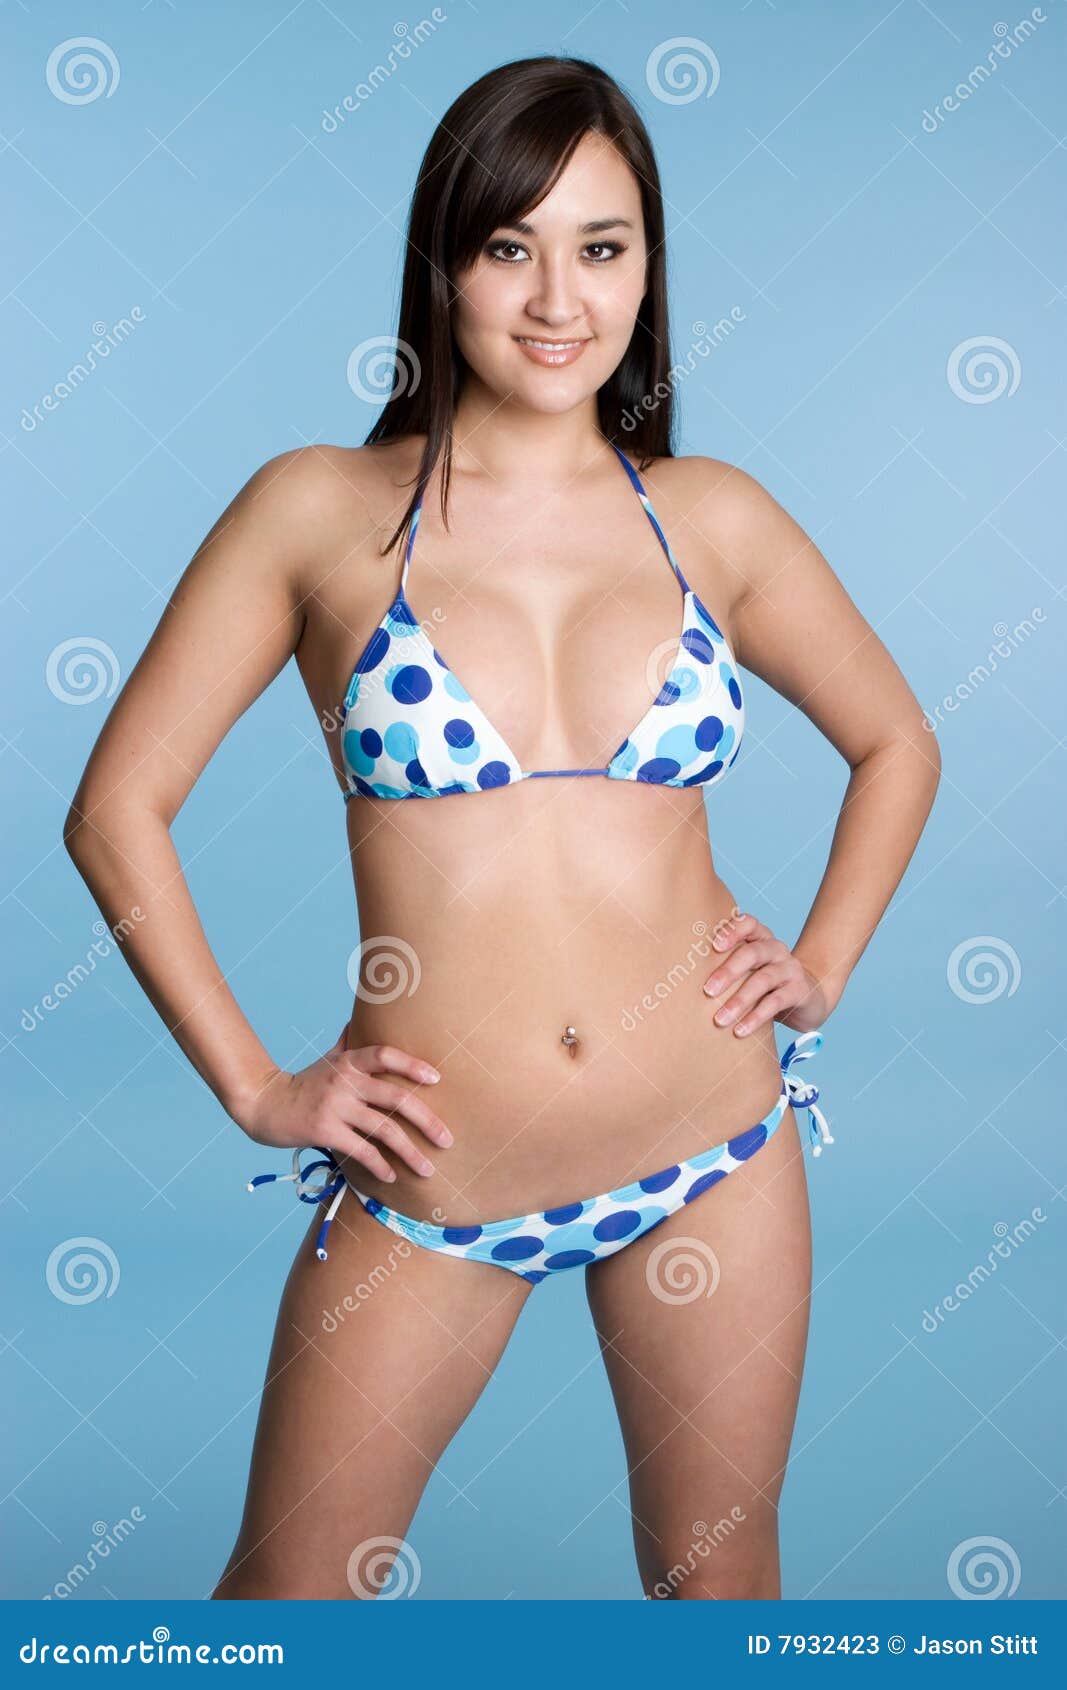 bikini girl japanese photo sex pics